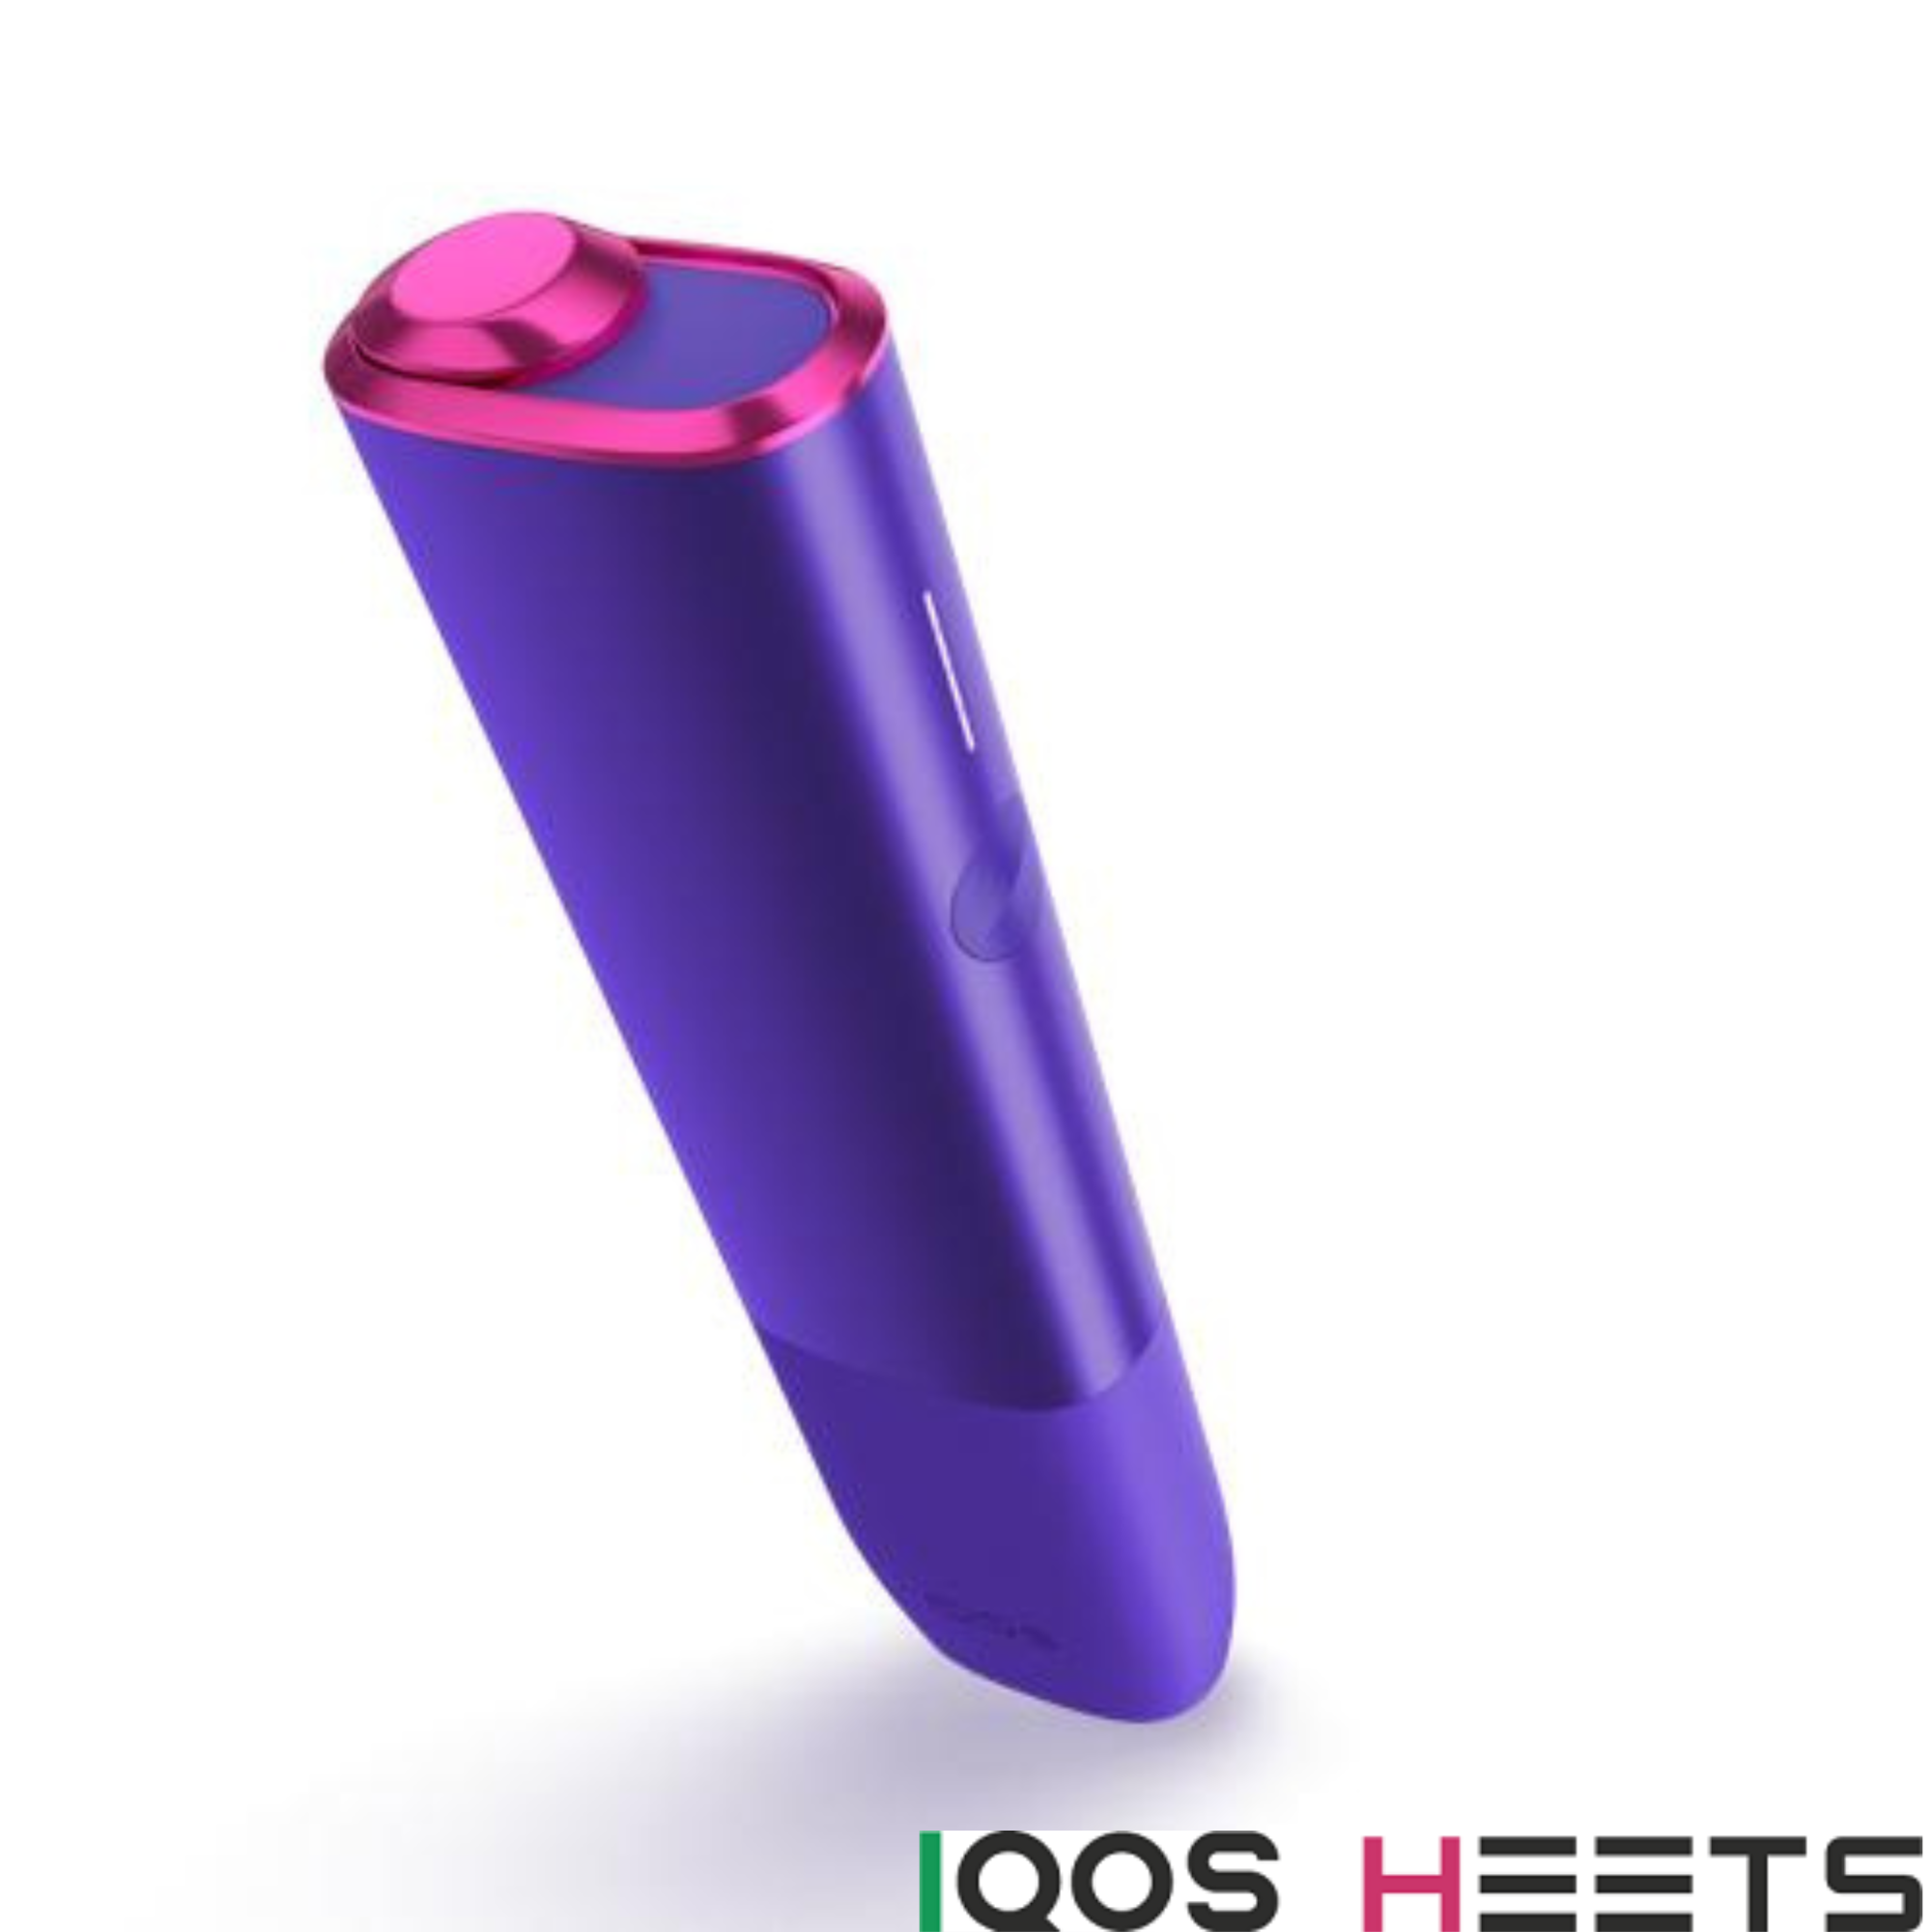 Buy IQOS Iluma Neon Limited Edition [ Price 879 AED ]